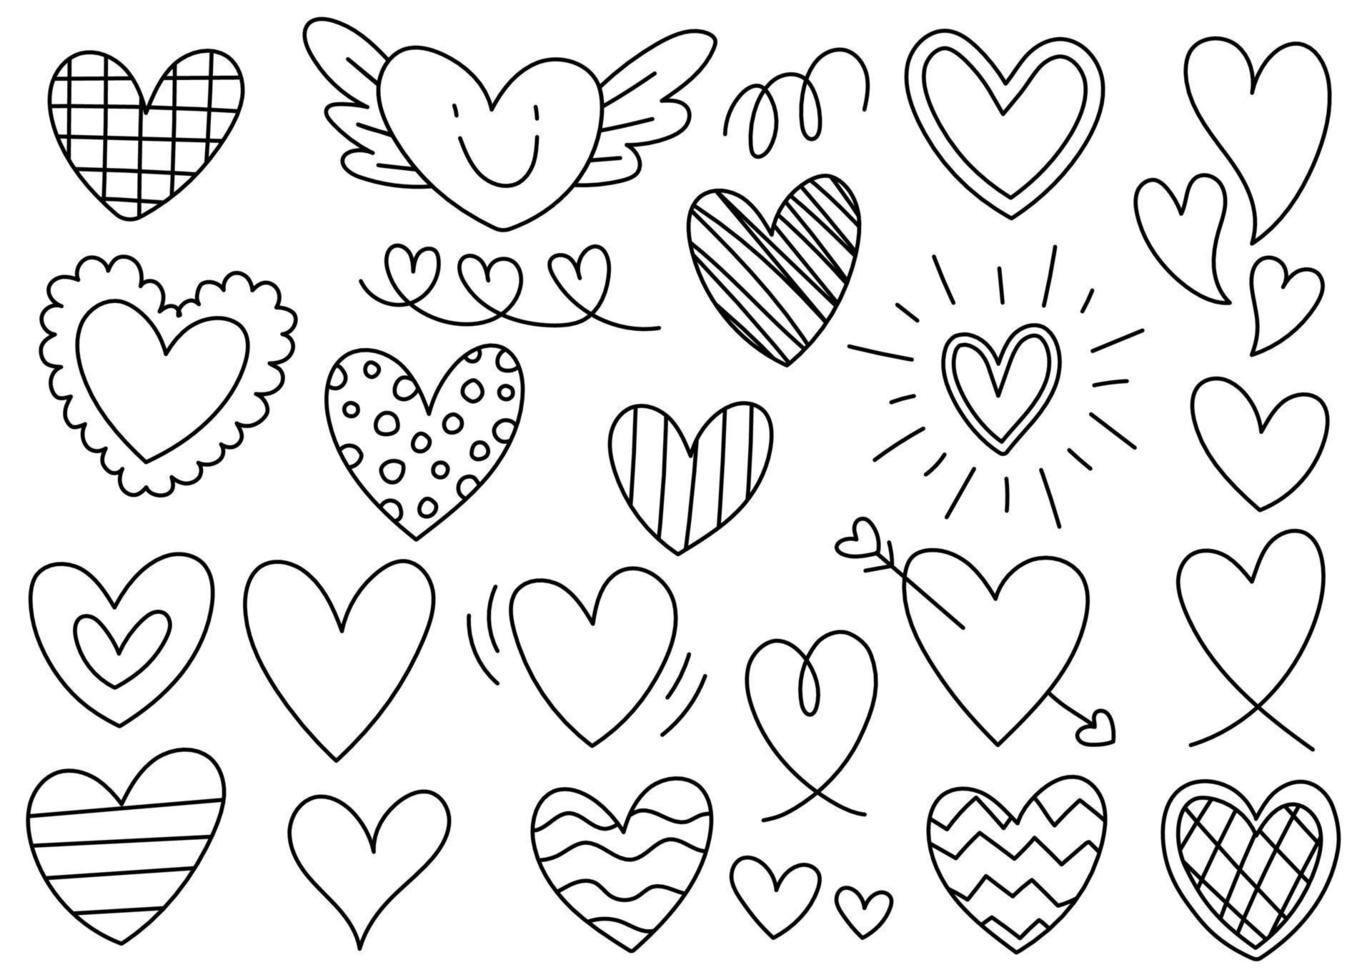 Cute Heart Element Decoration Valentine's Day Love Romantic Black Line Outline Form Doodle Cartoon Hand Drawing Sketch Vector Illustration Pack Set Bundle Collection